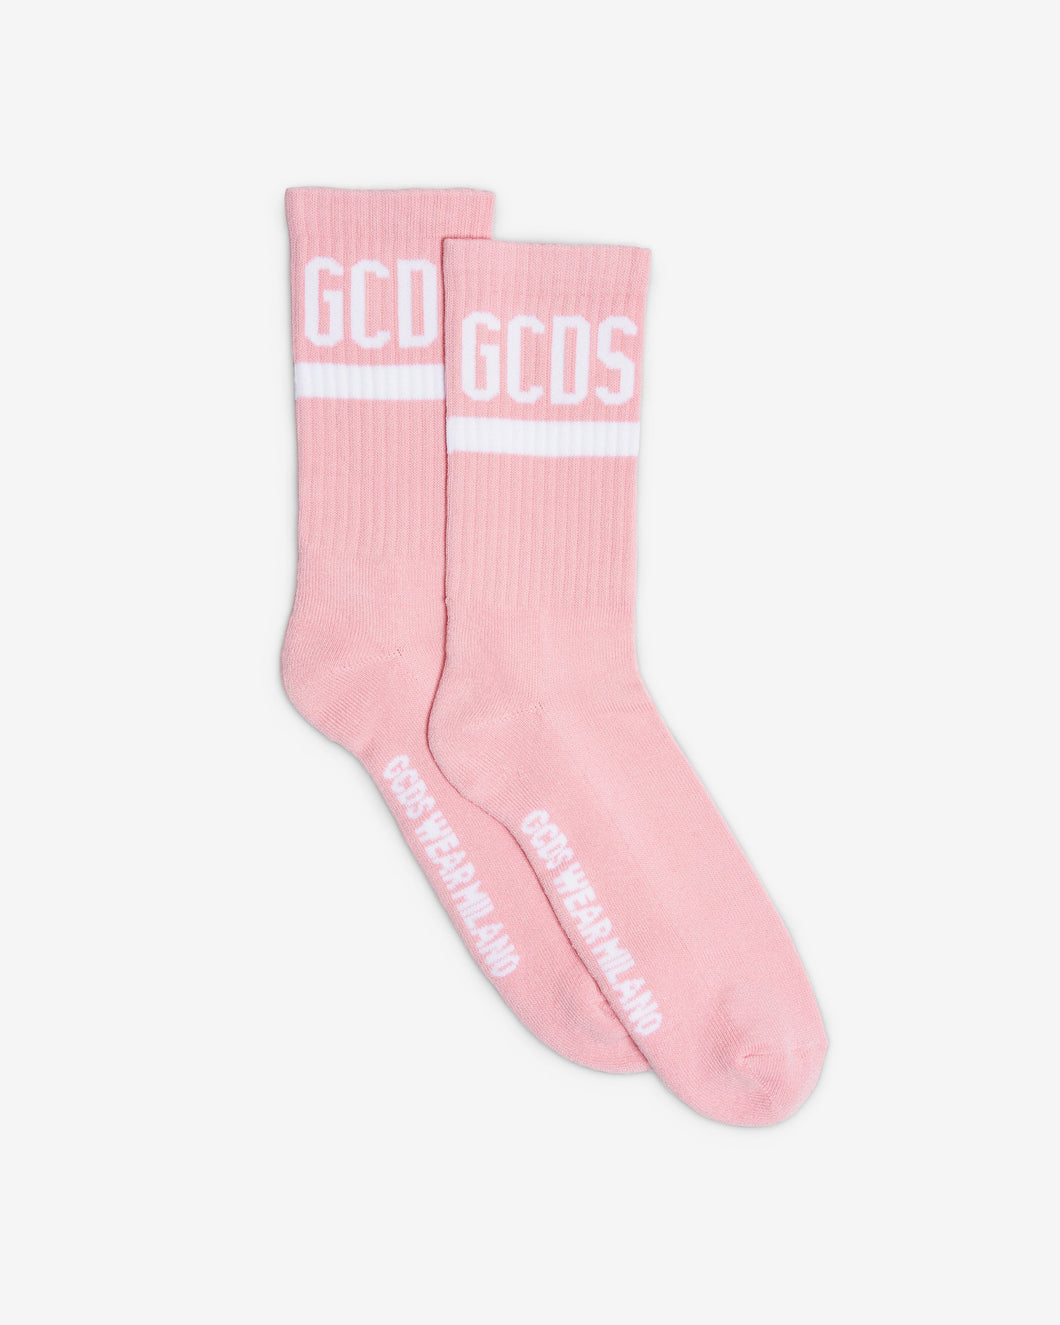 Gcds logo socks: Unisex Socks Pink | GCDS